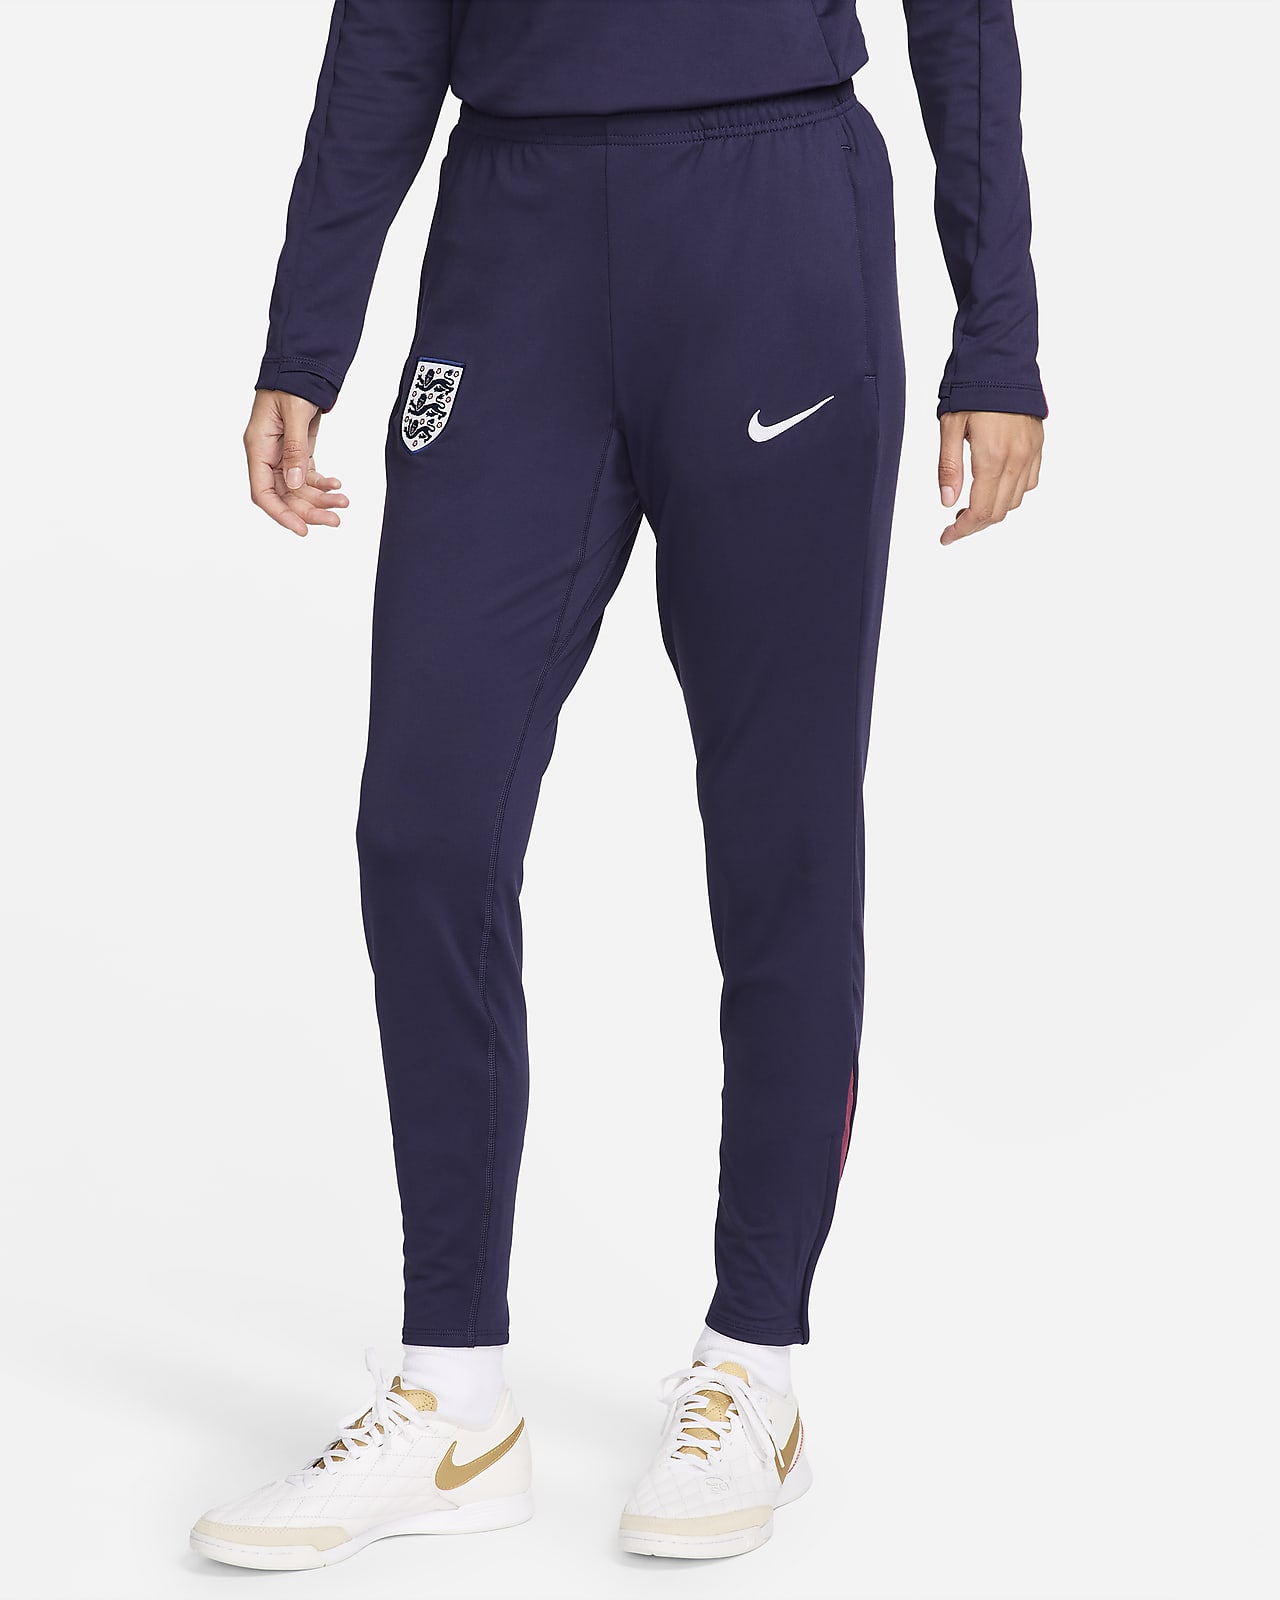 England Strike Women's Nike Dri-FIT Football Knit Pants